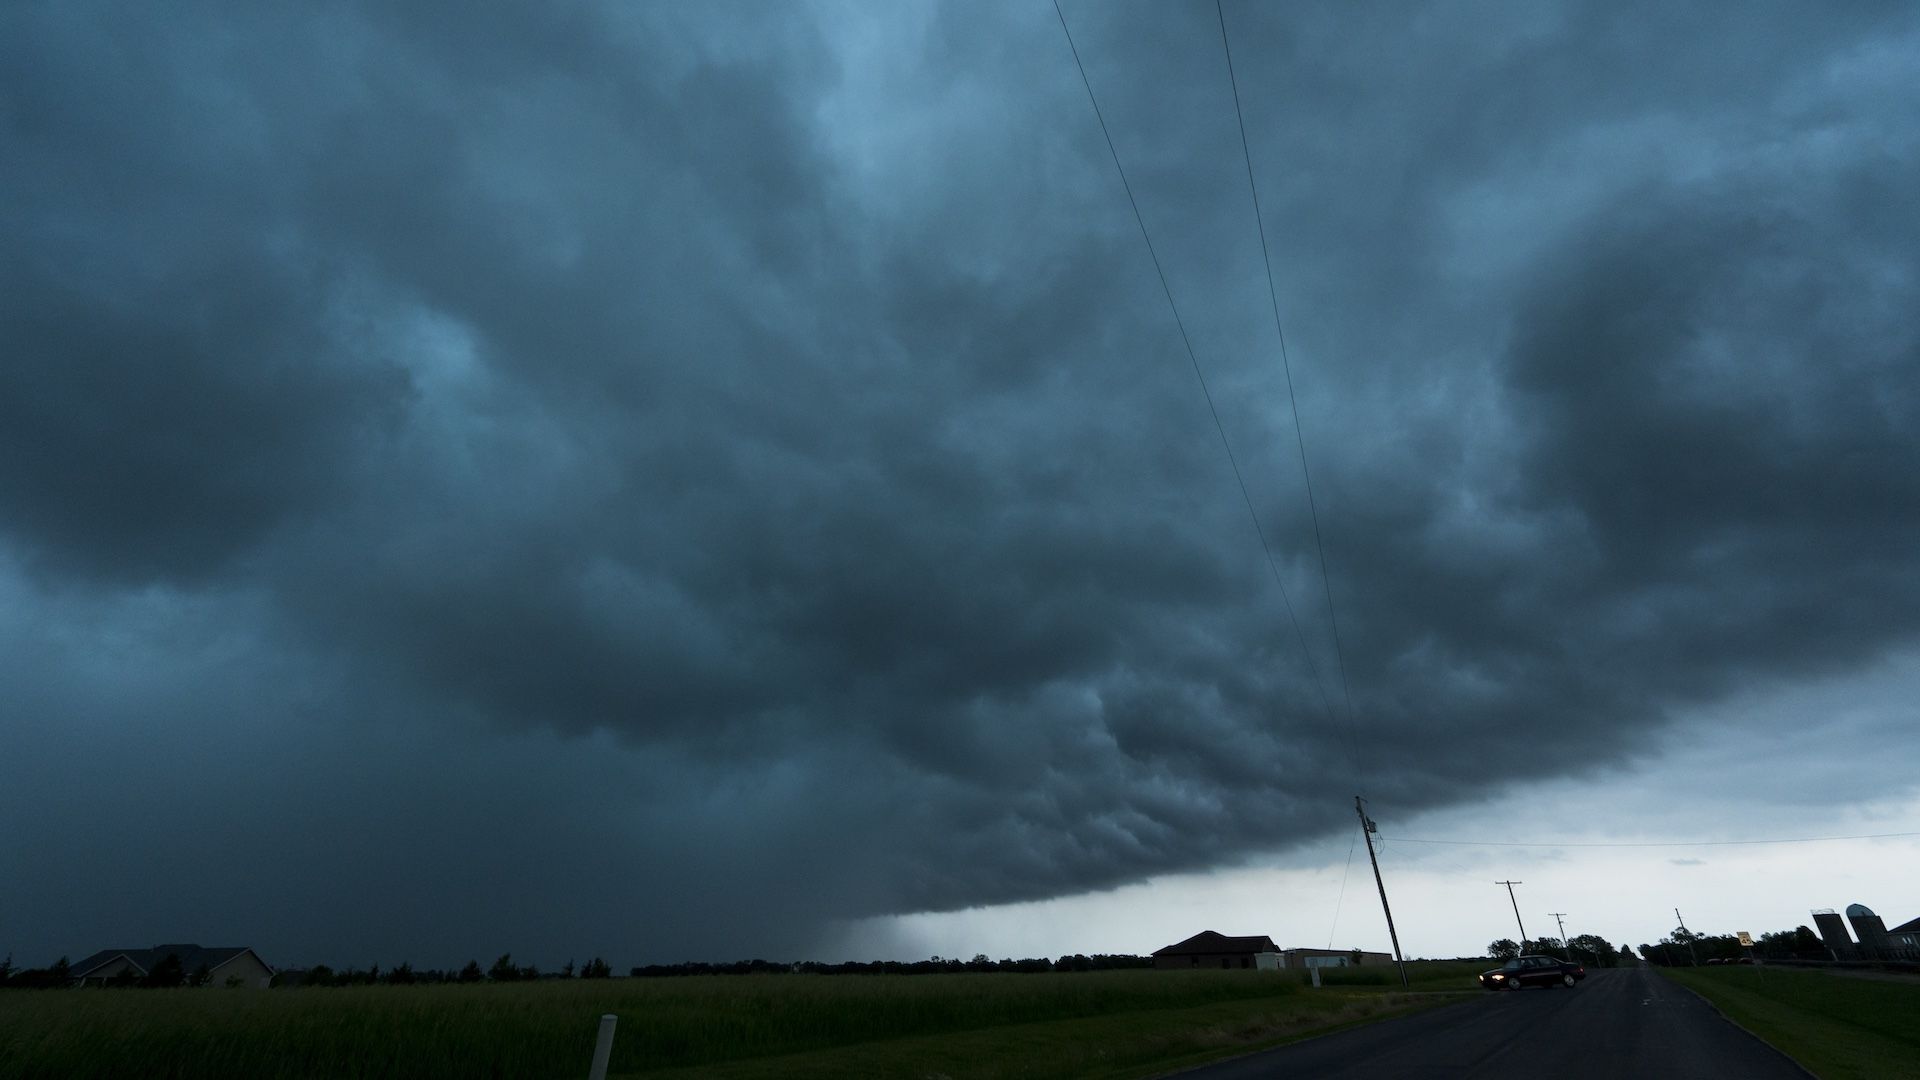 Stormy skies near Lawrence, Kansas on May 29, 2019